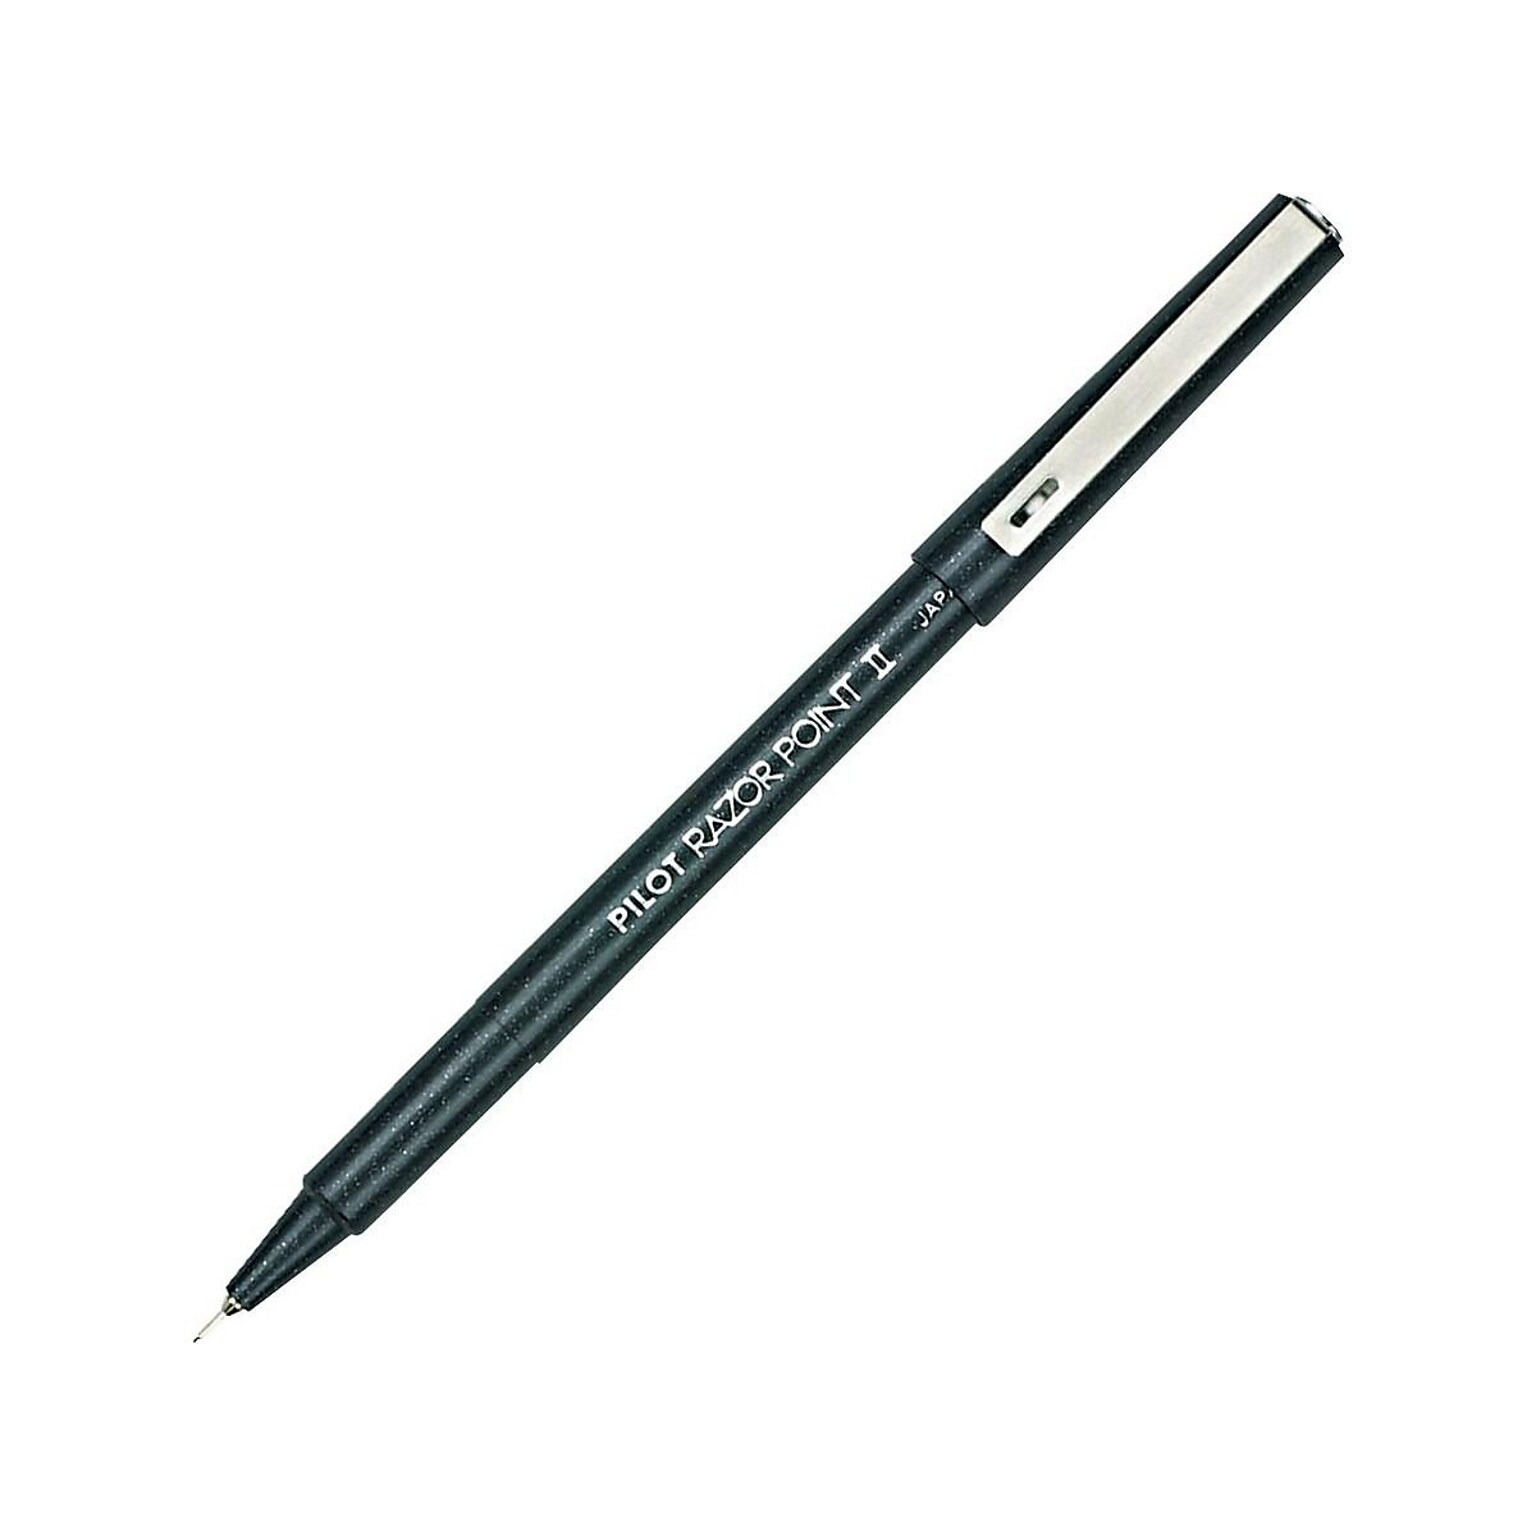 Pilot Razor Point II Marker Pens, Super Fine Point, Black Ink, Dozen (11009)